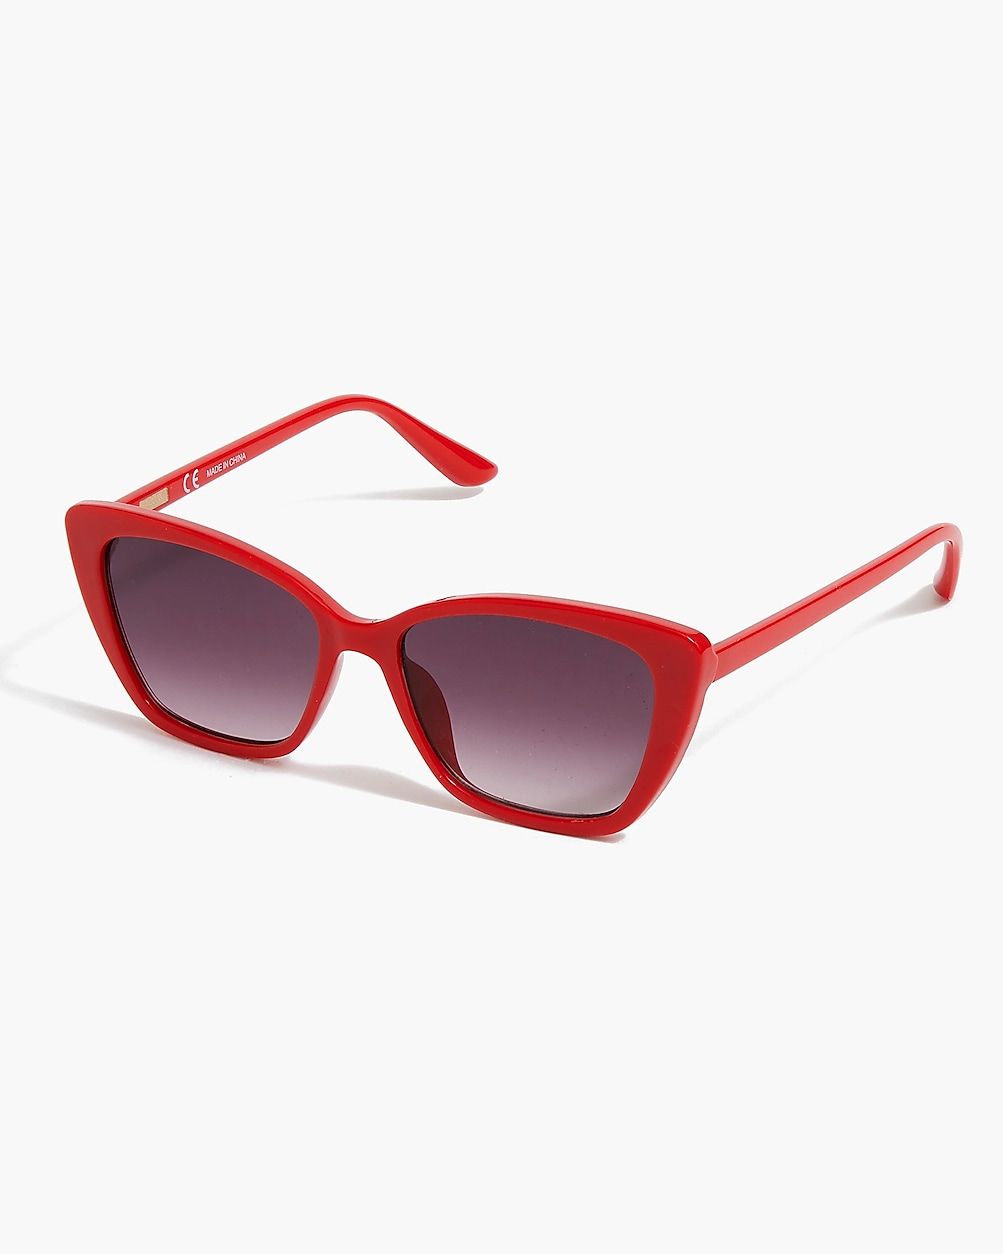 Cat-eye sunglasses | J.Crew Factory